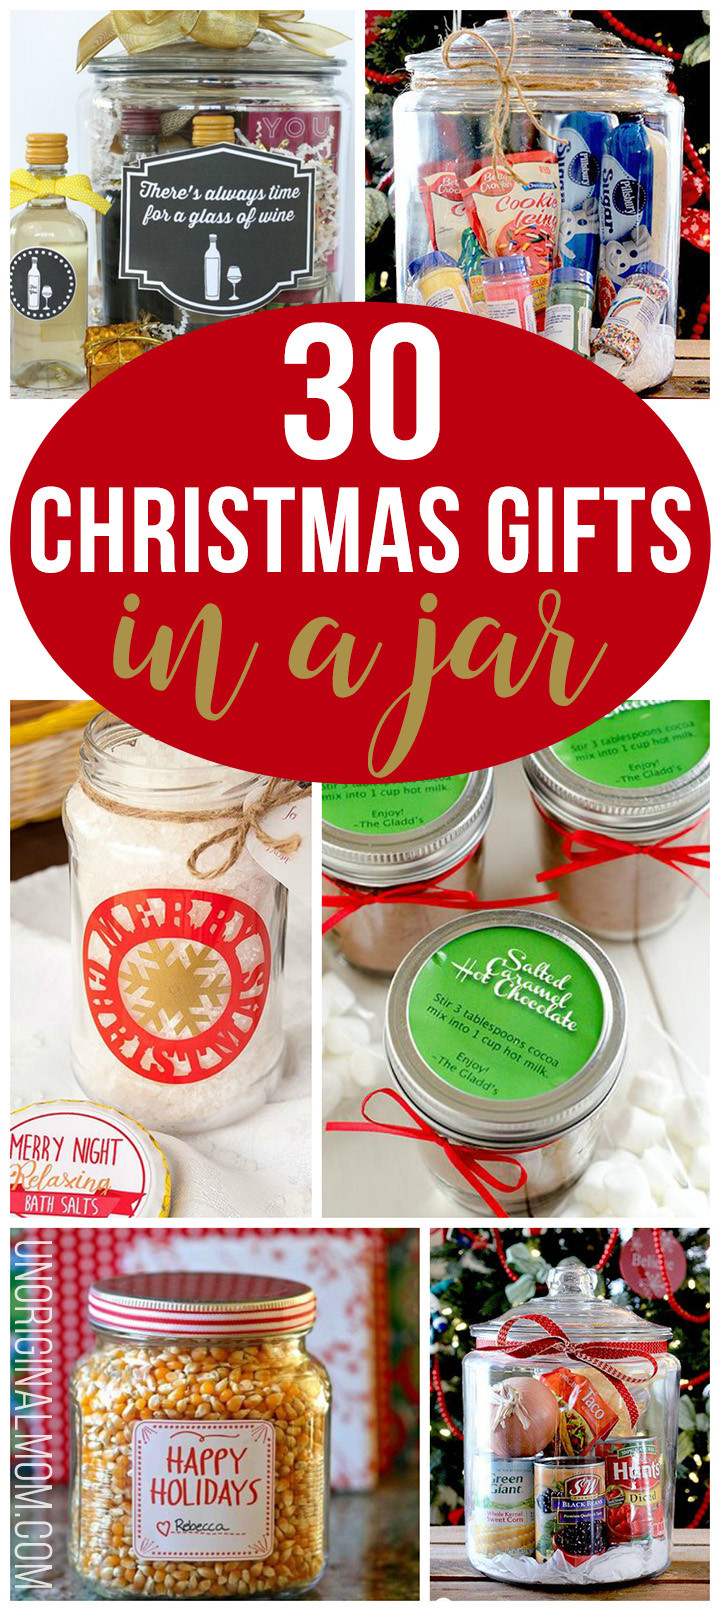 Good Christmas Gift Ideas
 30 Christmas Gifts in a Jar unOriginal Mom